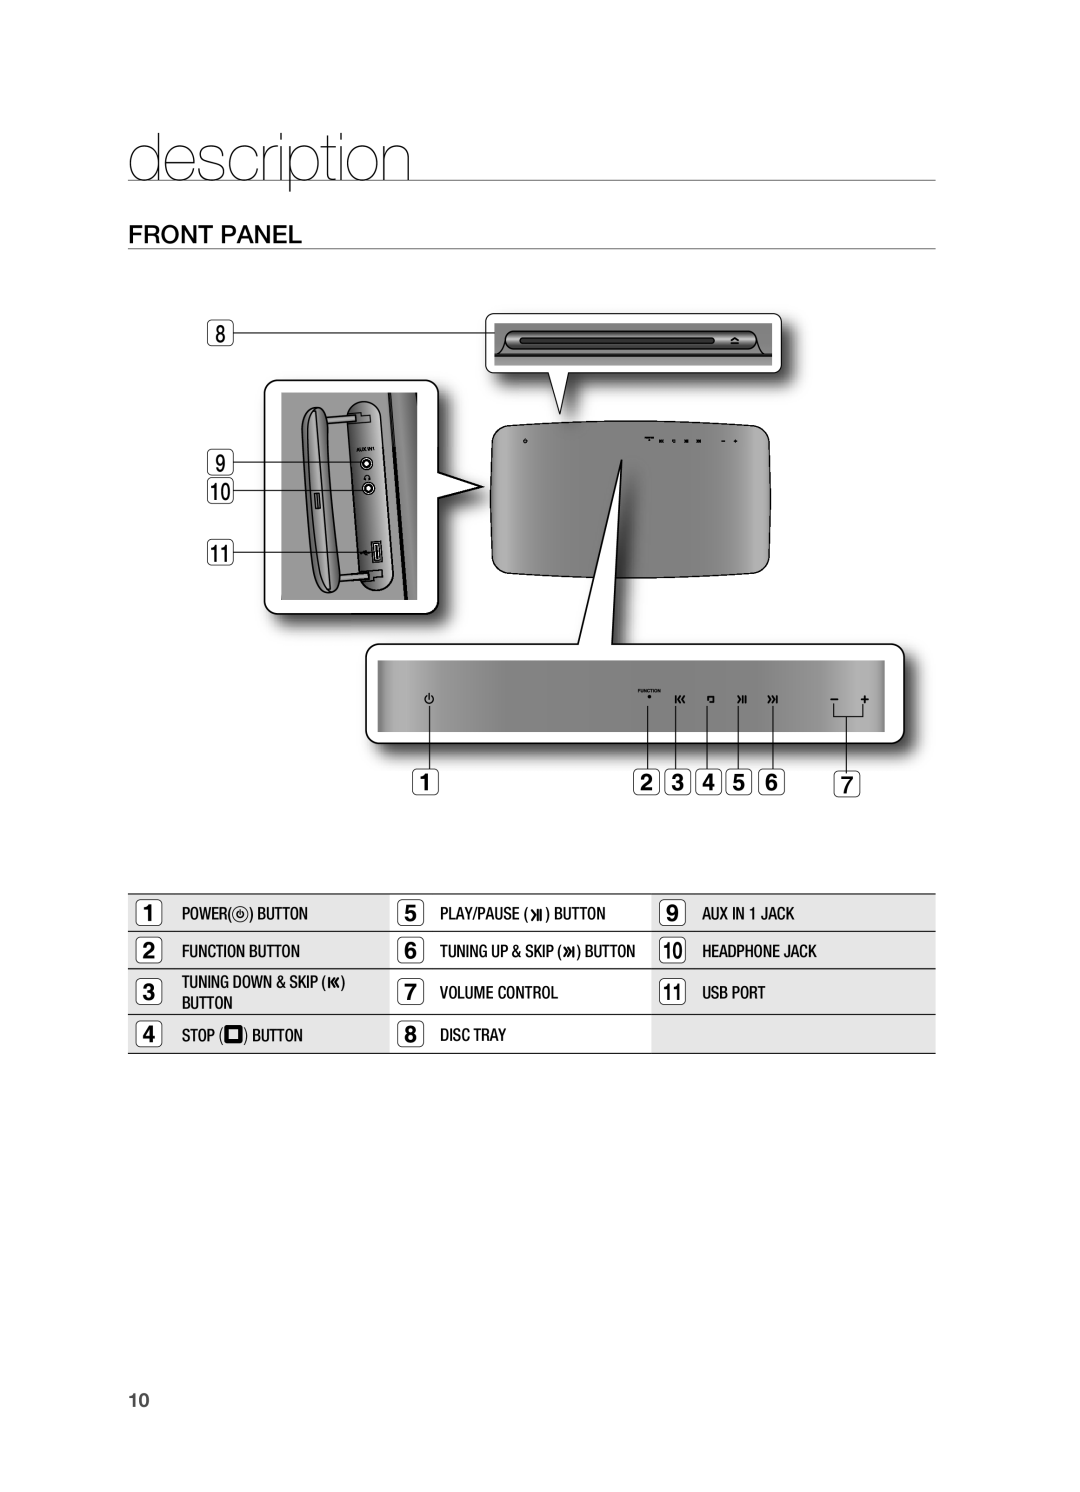 Samsung HT-TX715 user manual description, FrONT PANEL 